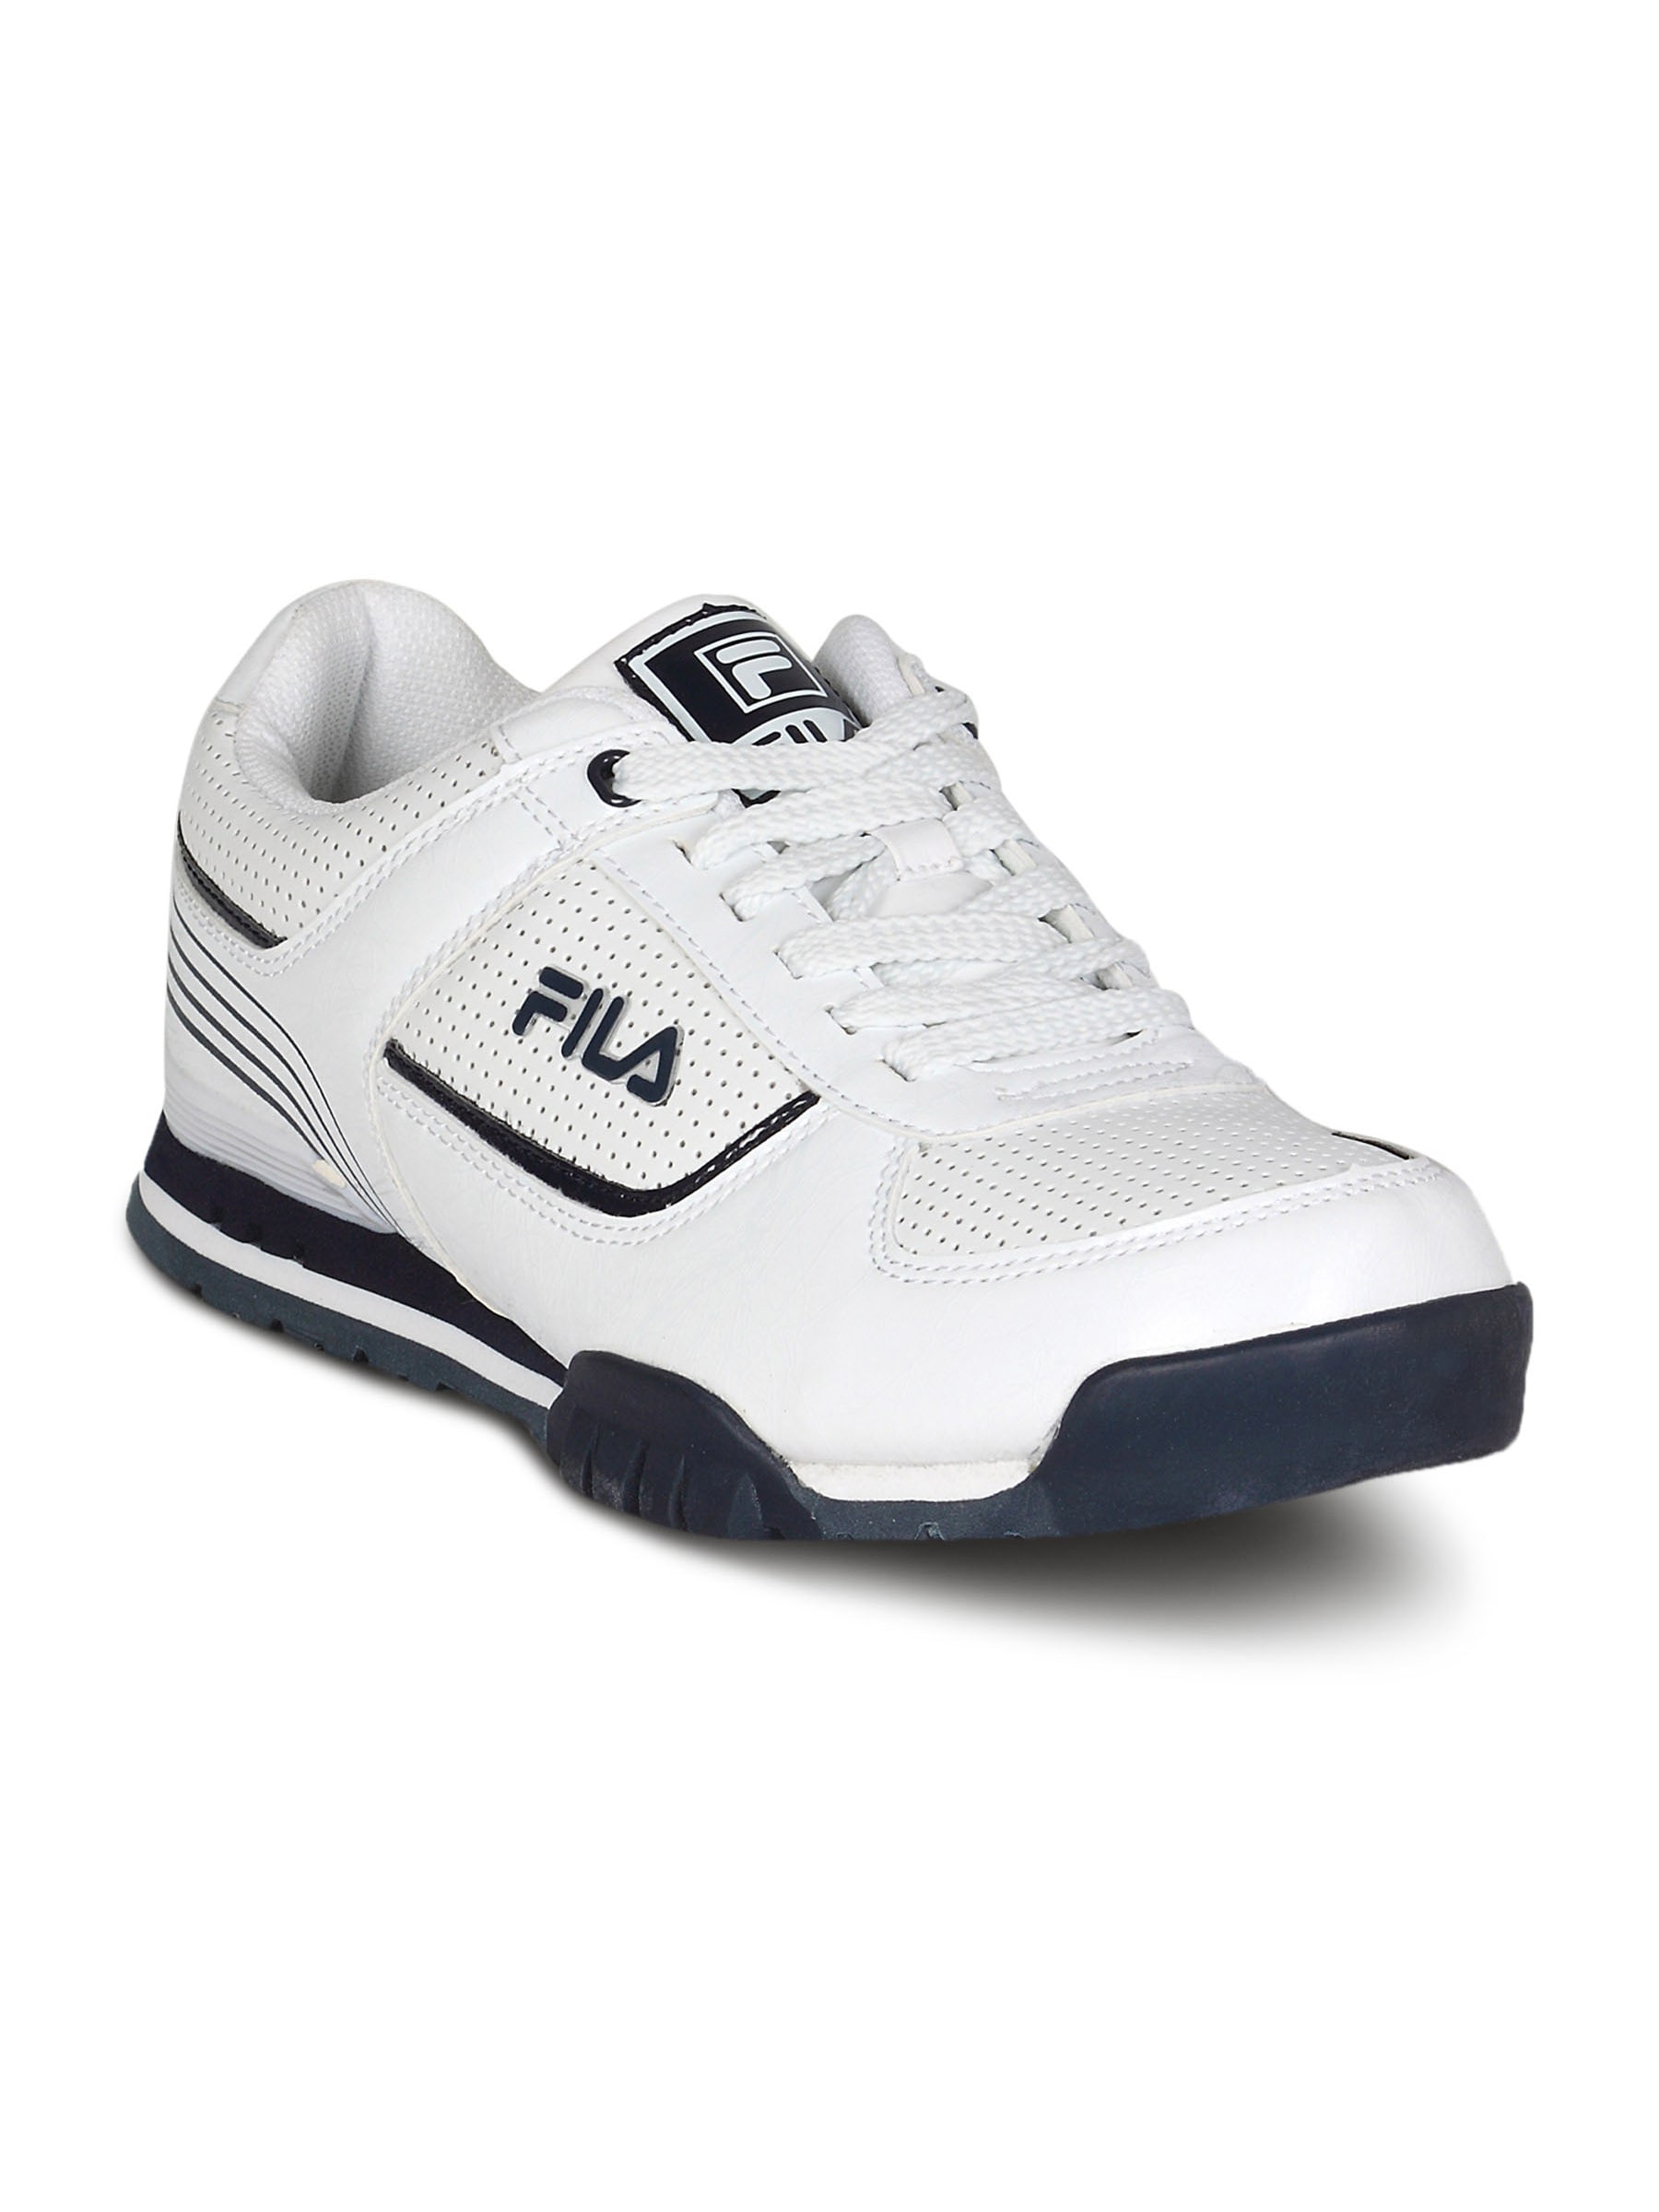 Fila Men's Vision White Navy Shoe